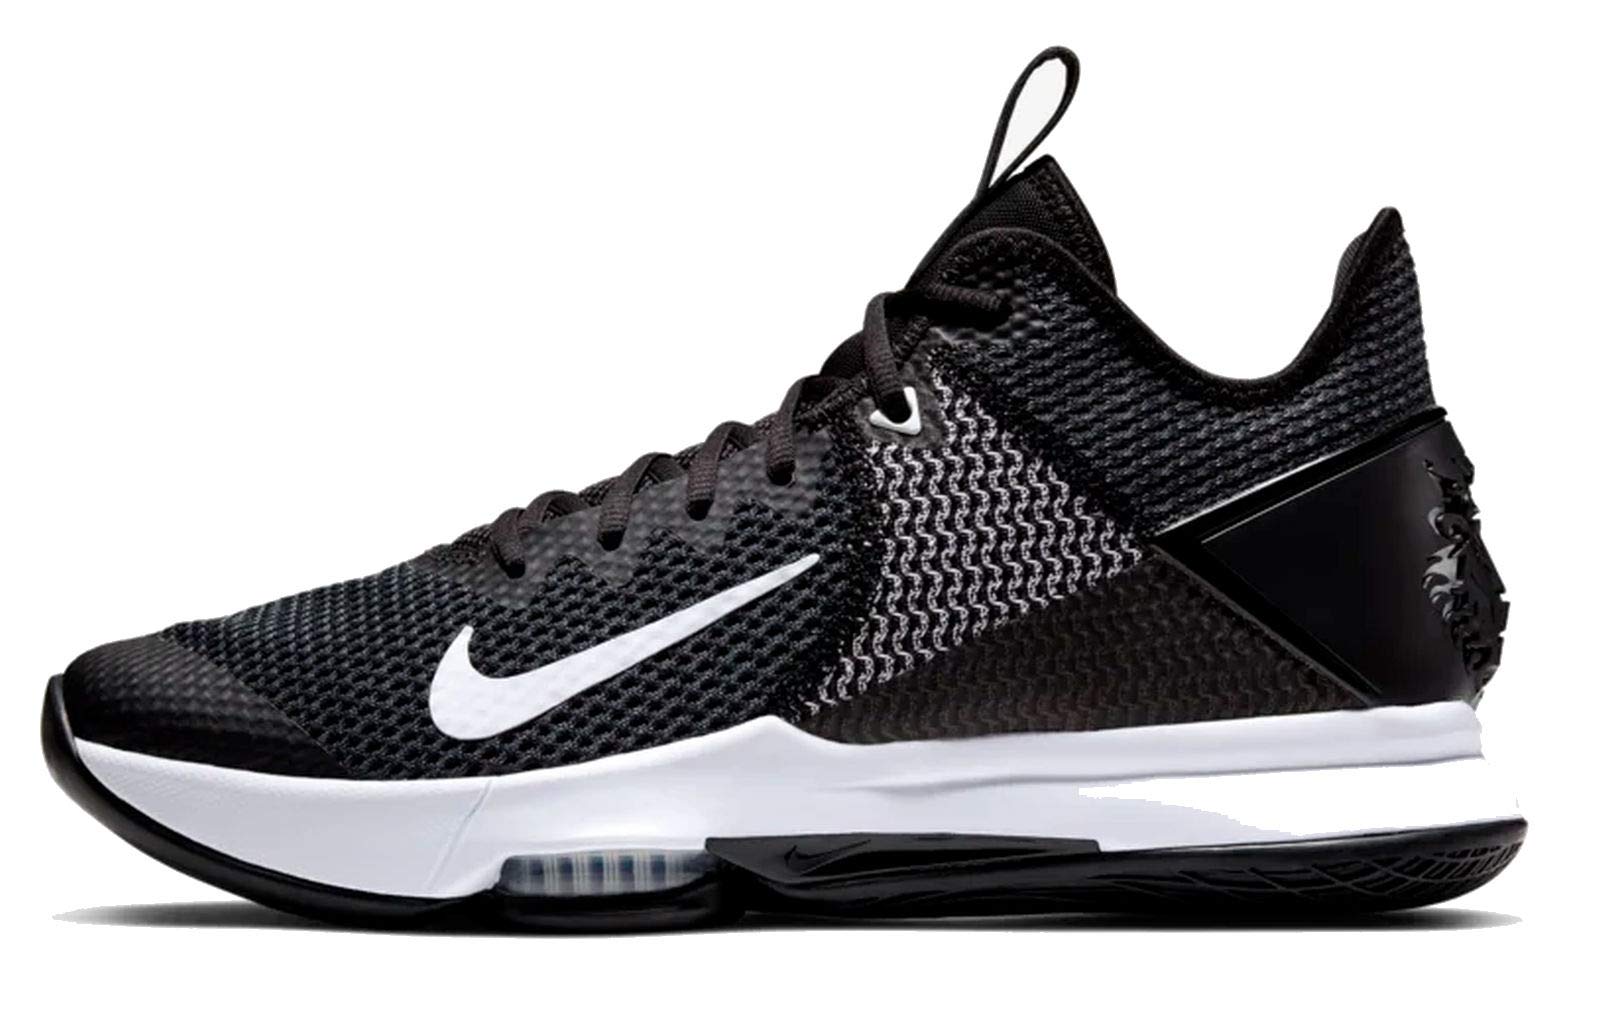 Nike Men's Lebron Witness IV Basketball Shoes